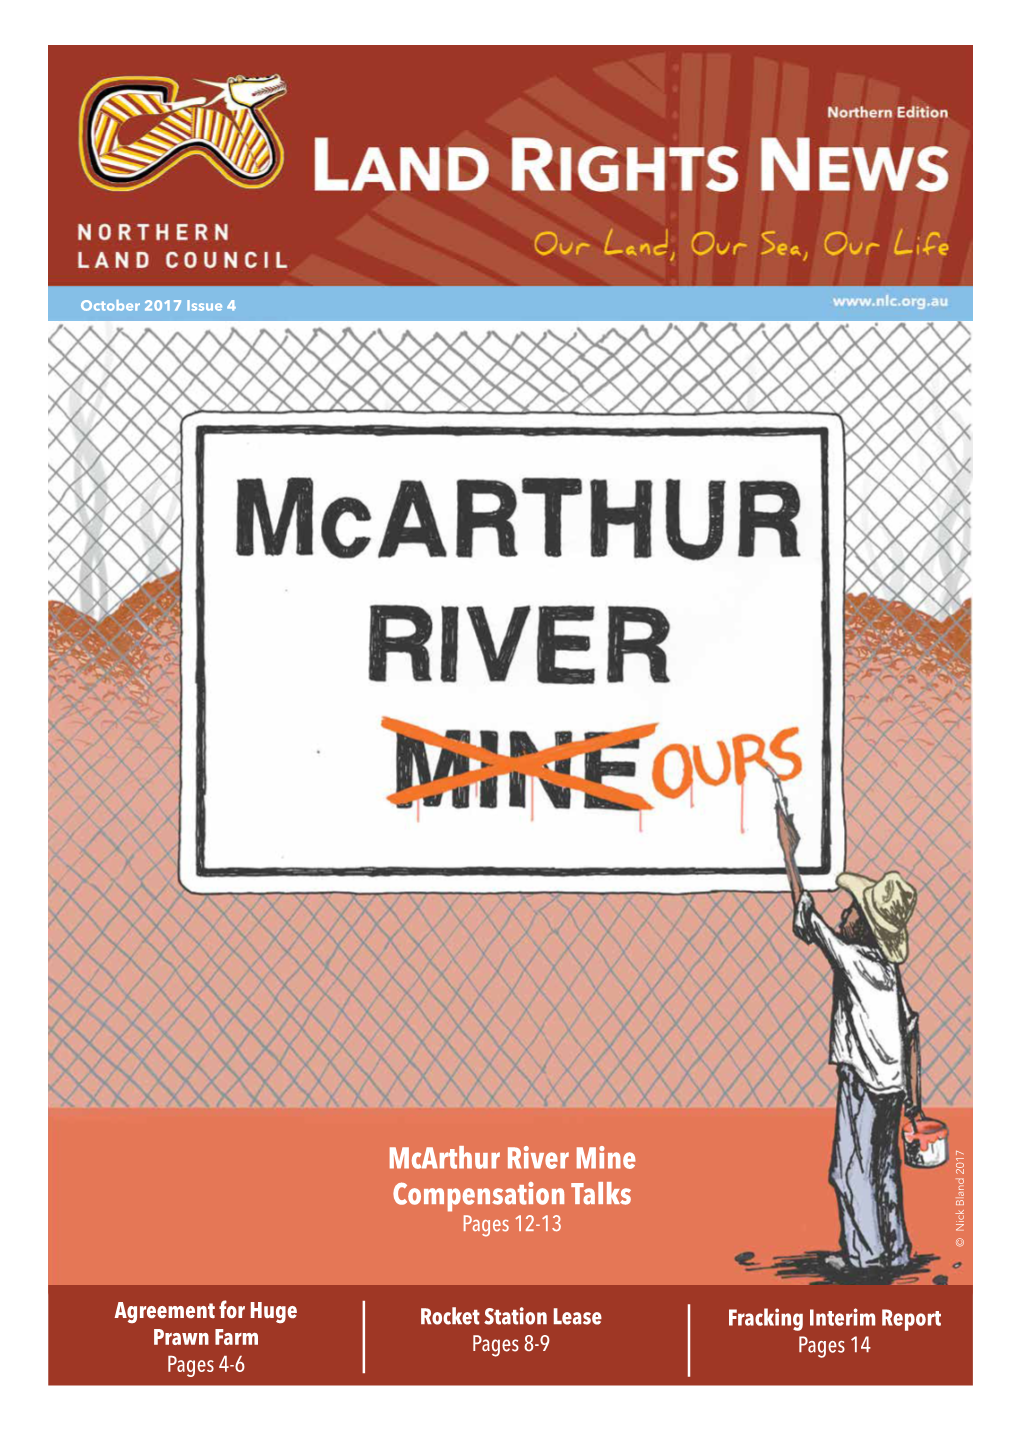 Mcarthur River Mine Compensation Talks Pages 12-13 © Nick Bland 2017